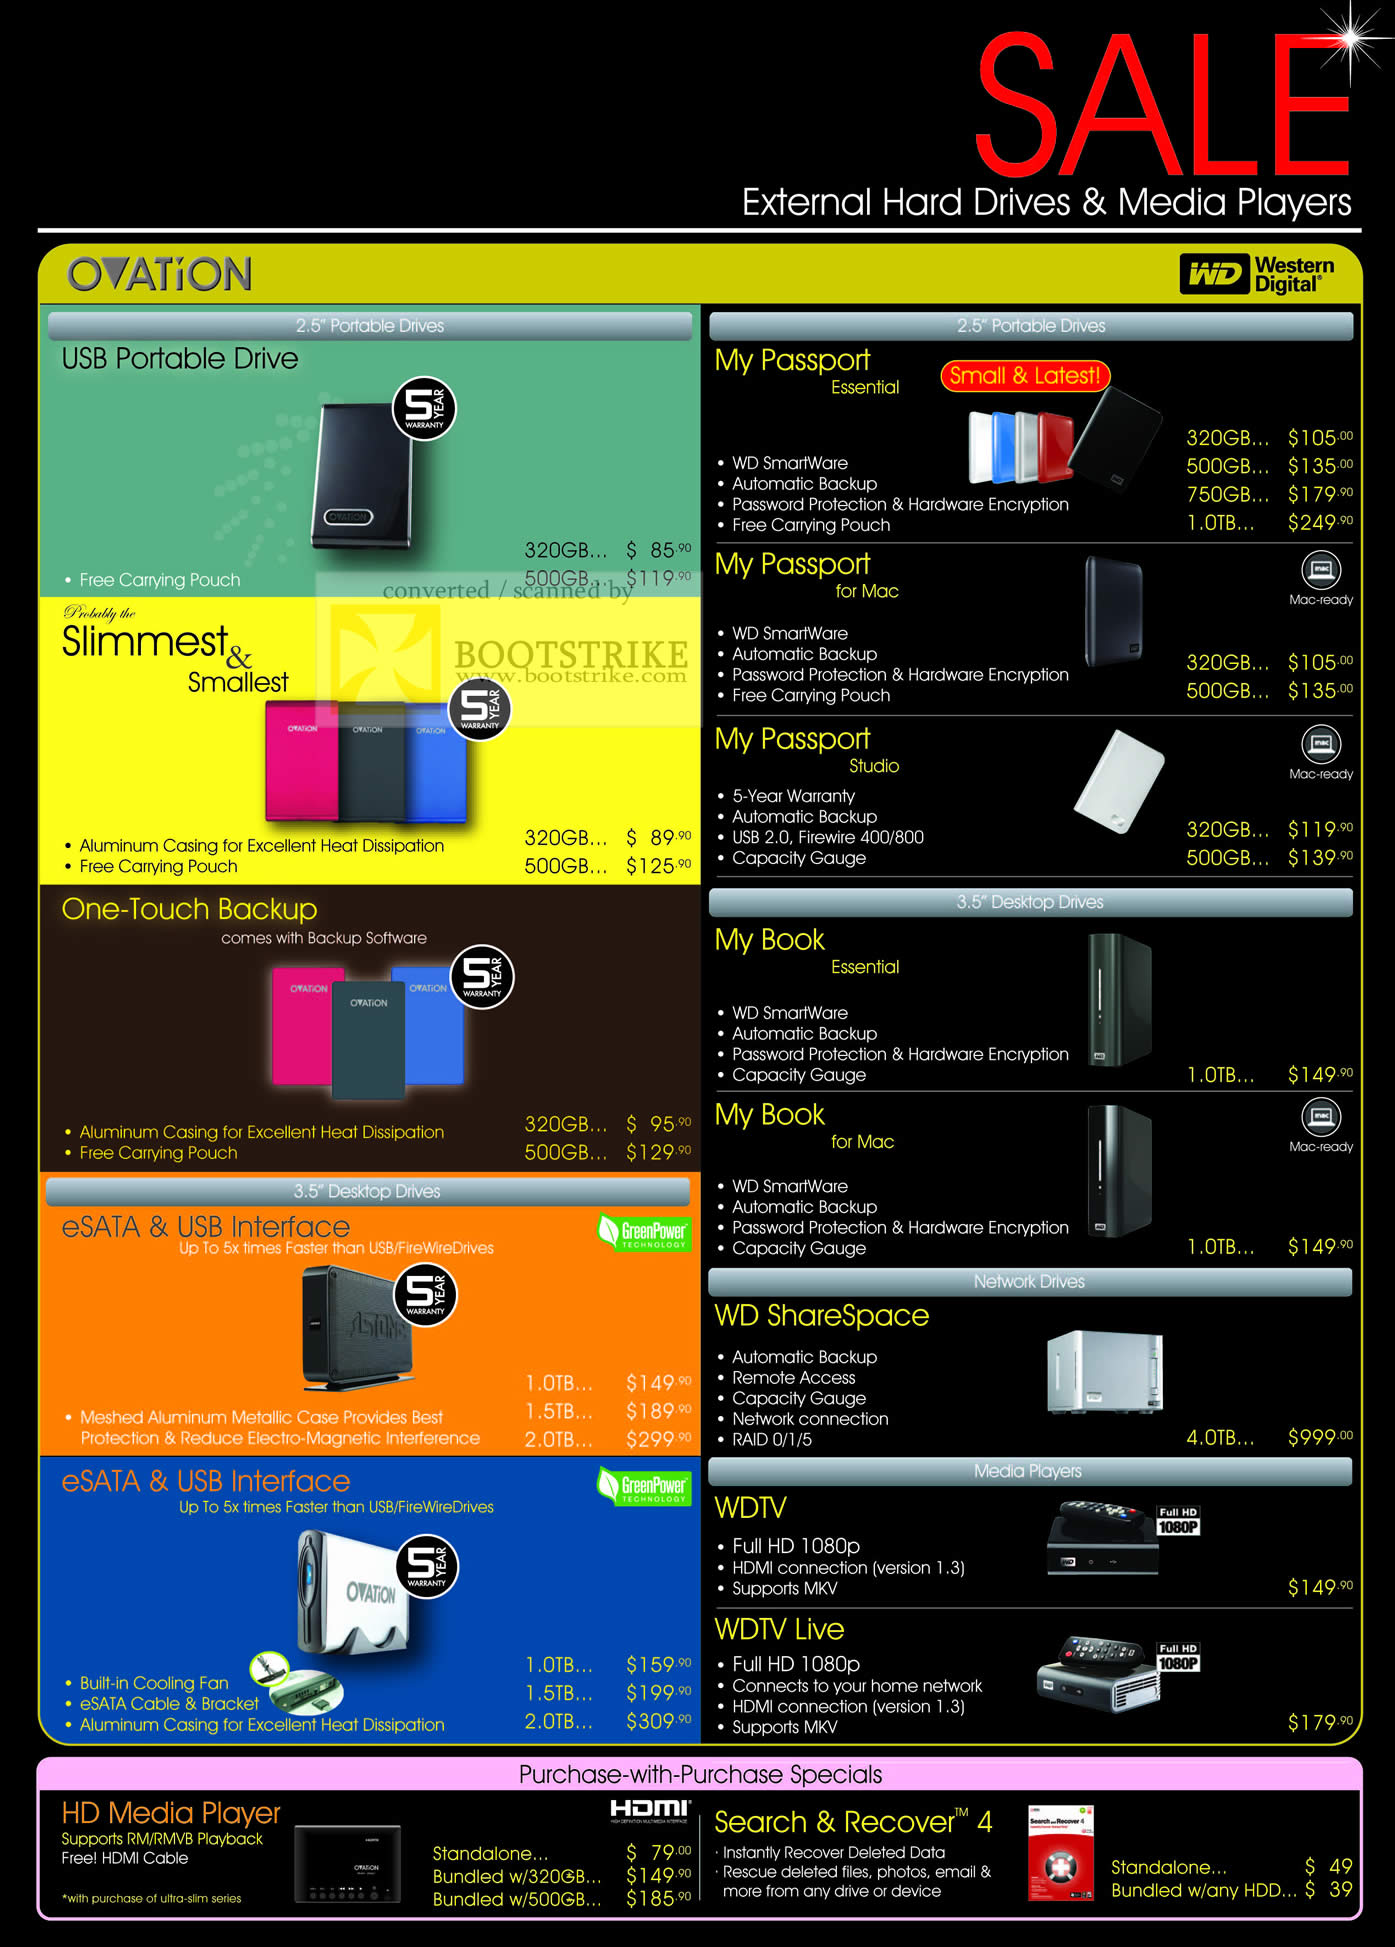 Sitex 2009 price list image brochure of Western Digital WD Ovation External Portable Drive Passport Book ShareSpace WDTV Live